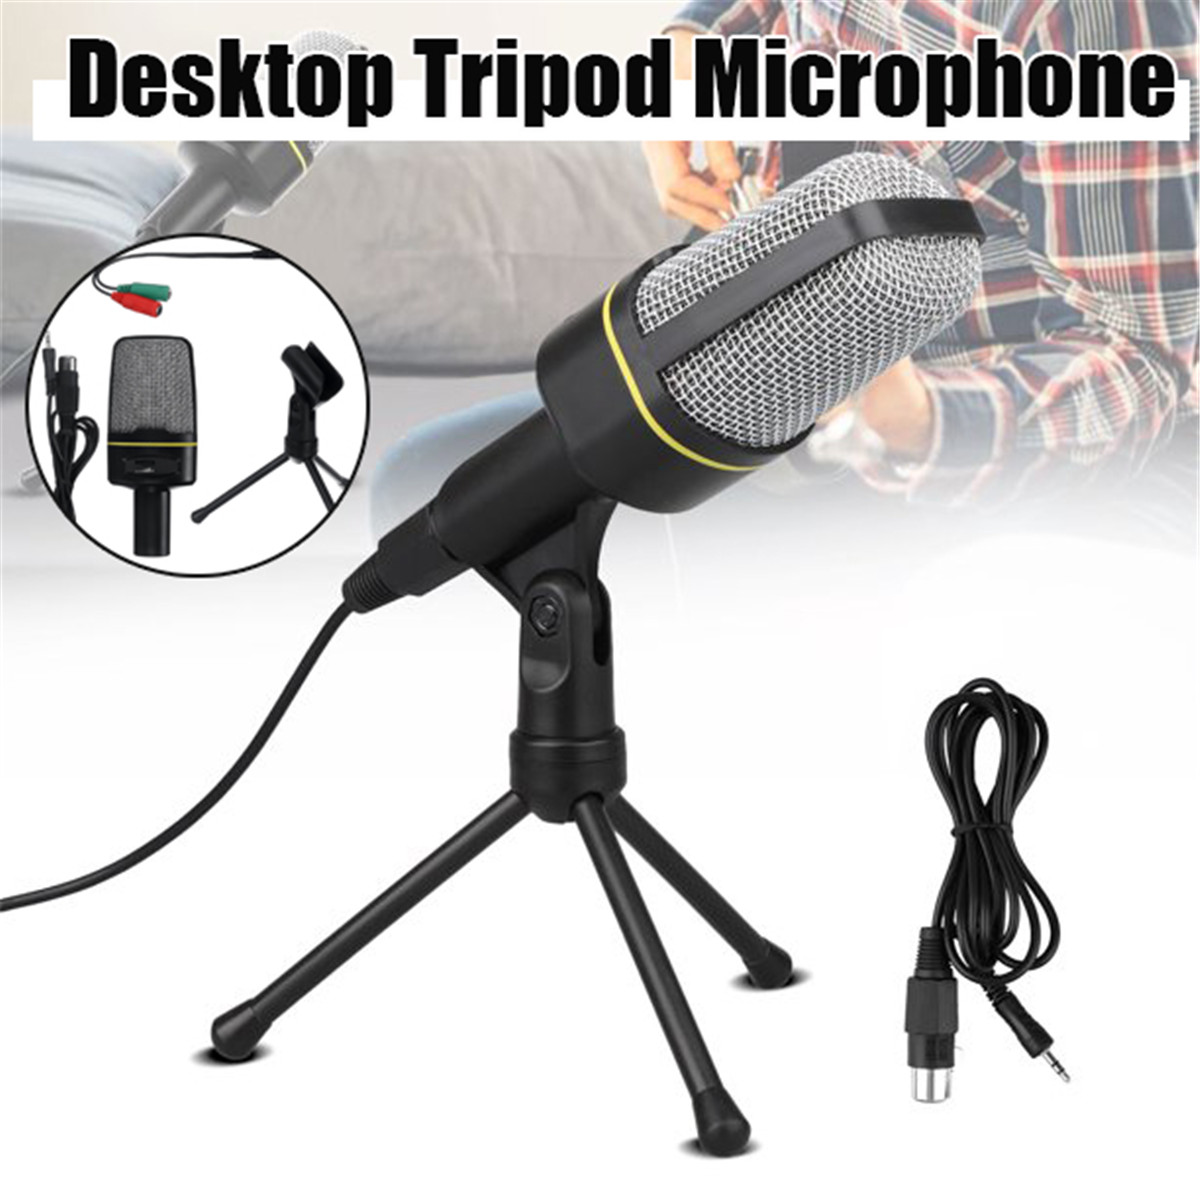 Desktop-Tripod-Microphone-Profession-For-PC-Phone-YouTube-Skype-Games-Desktop-1740882-1